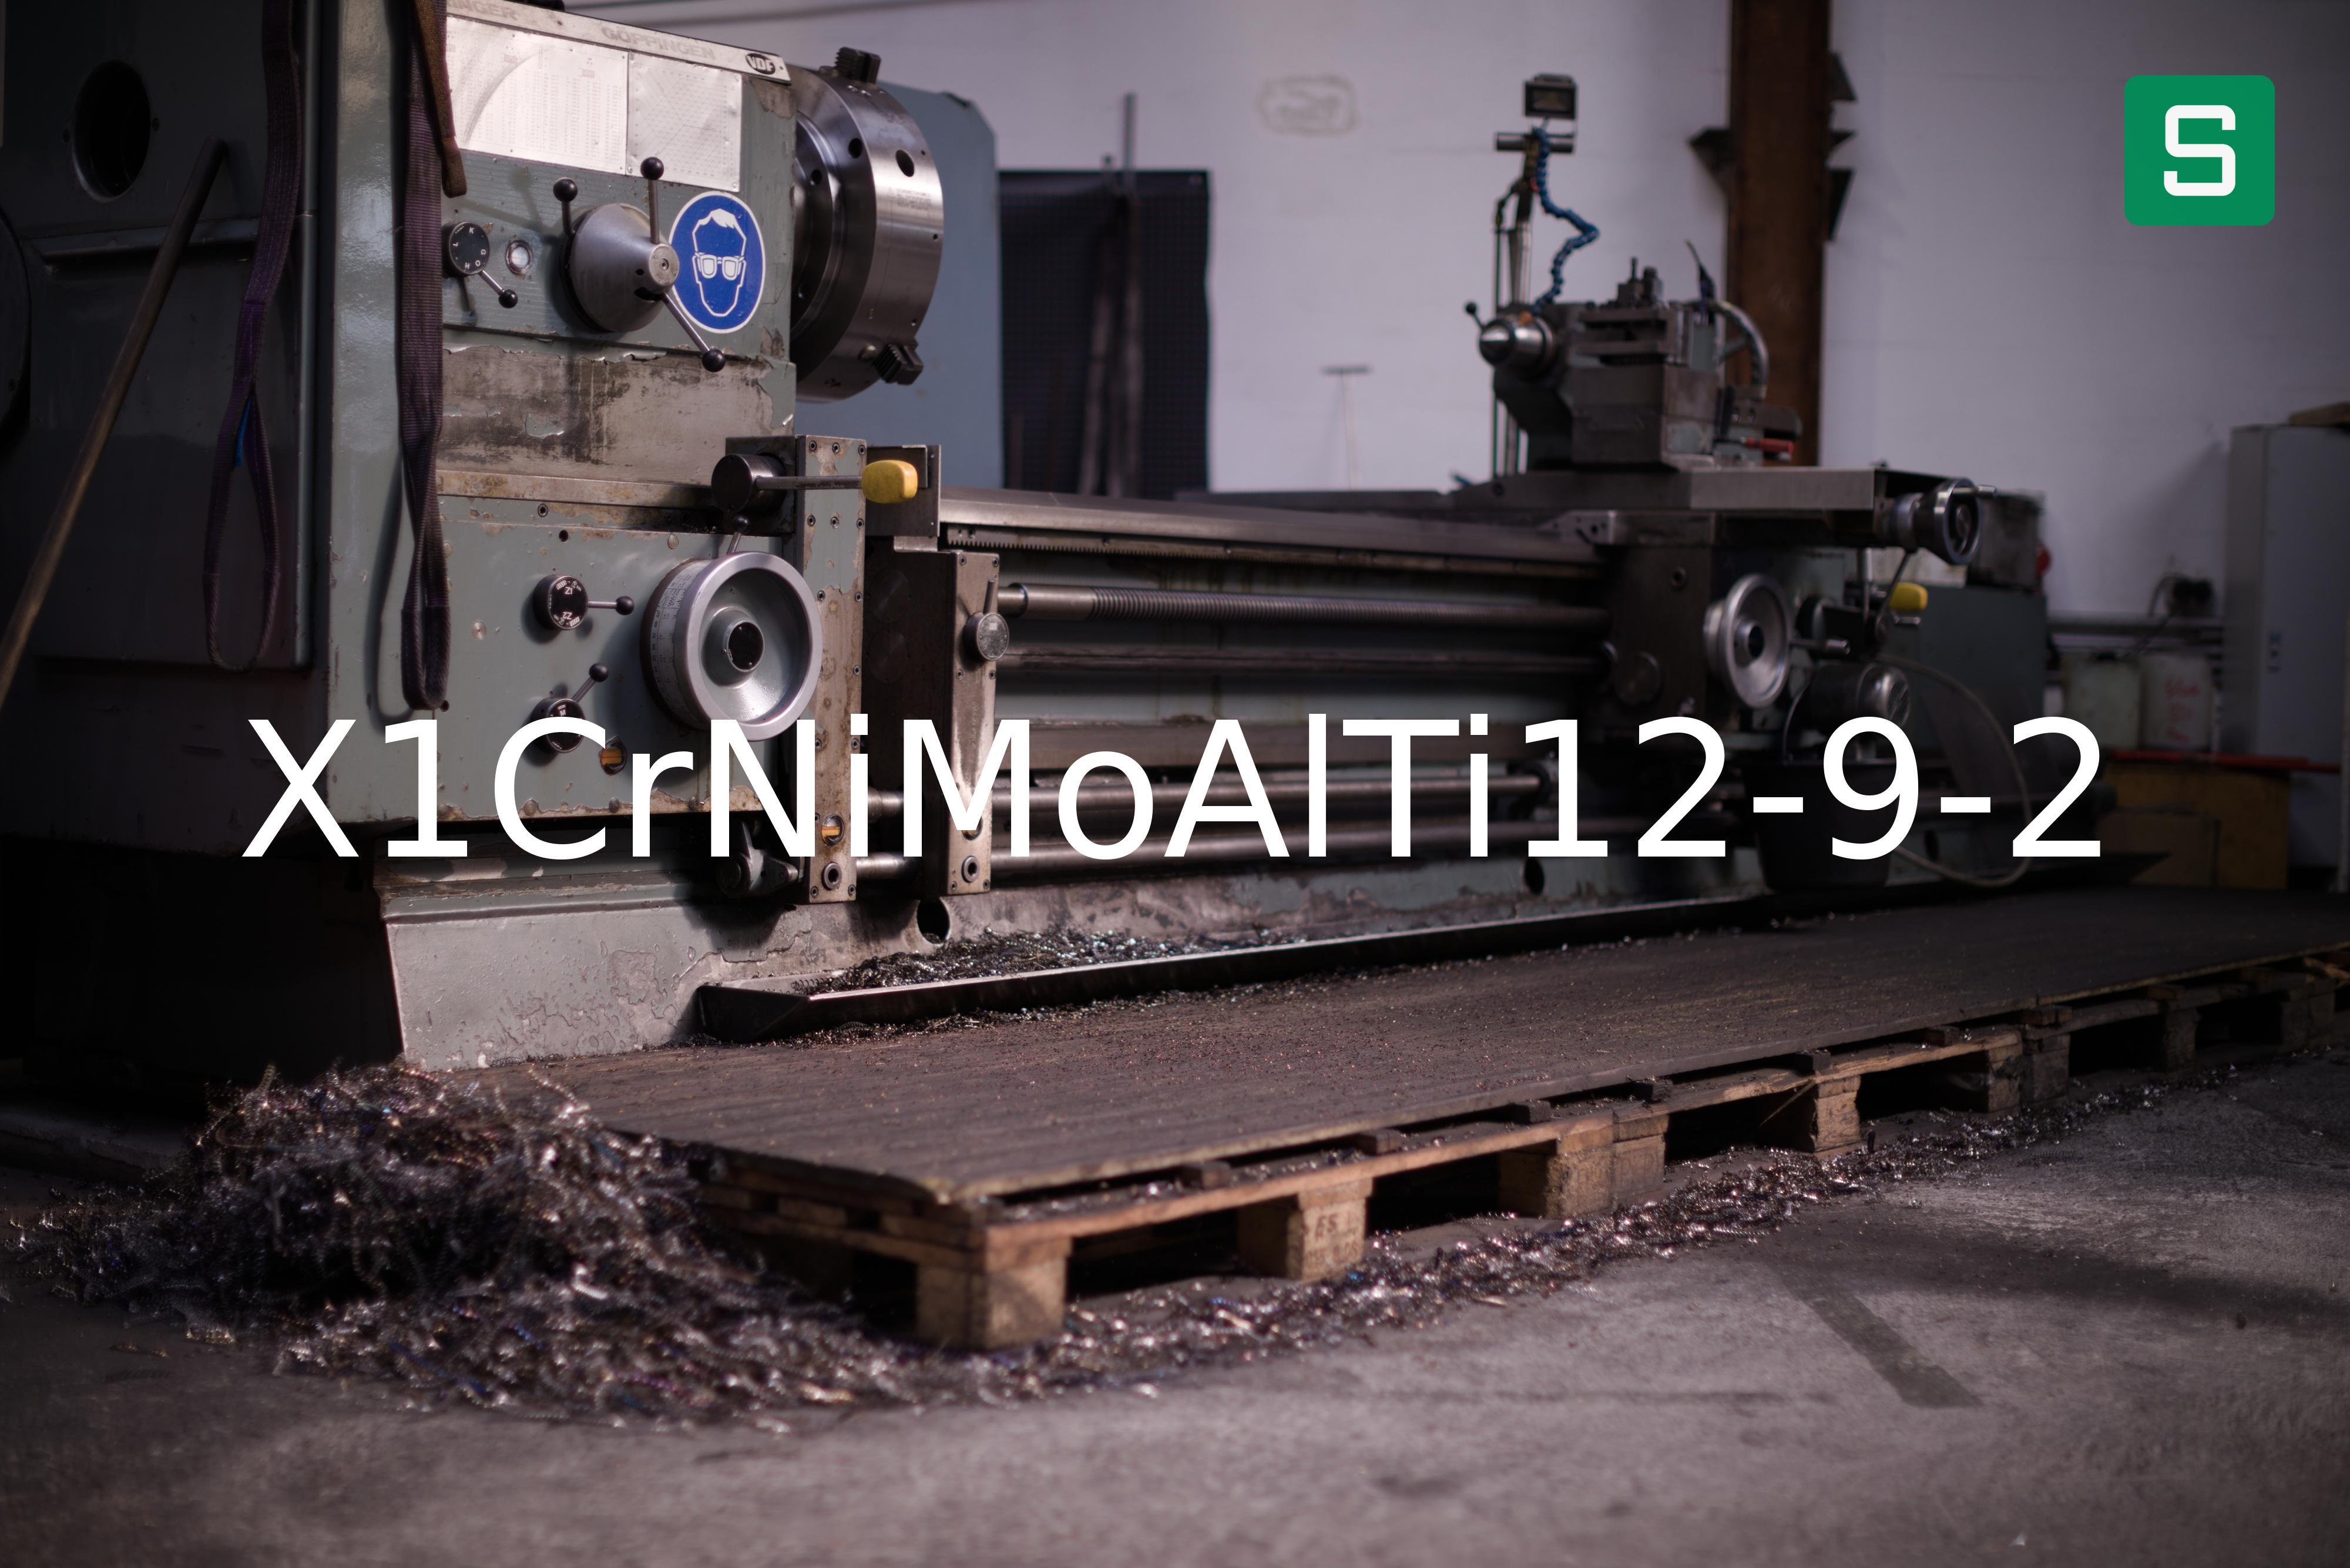 Steel Material: X1CrNiMoAlTi12-9-2